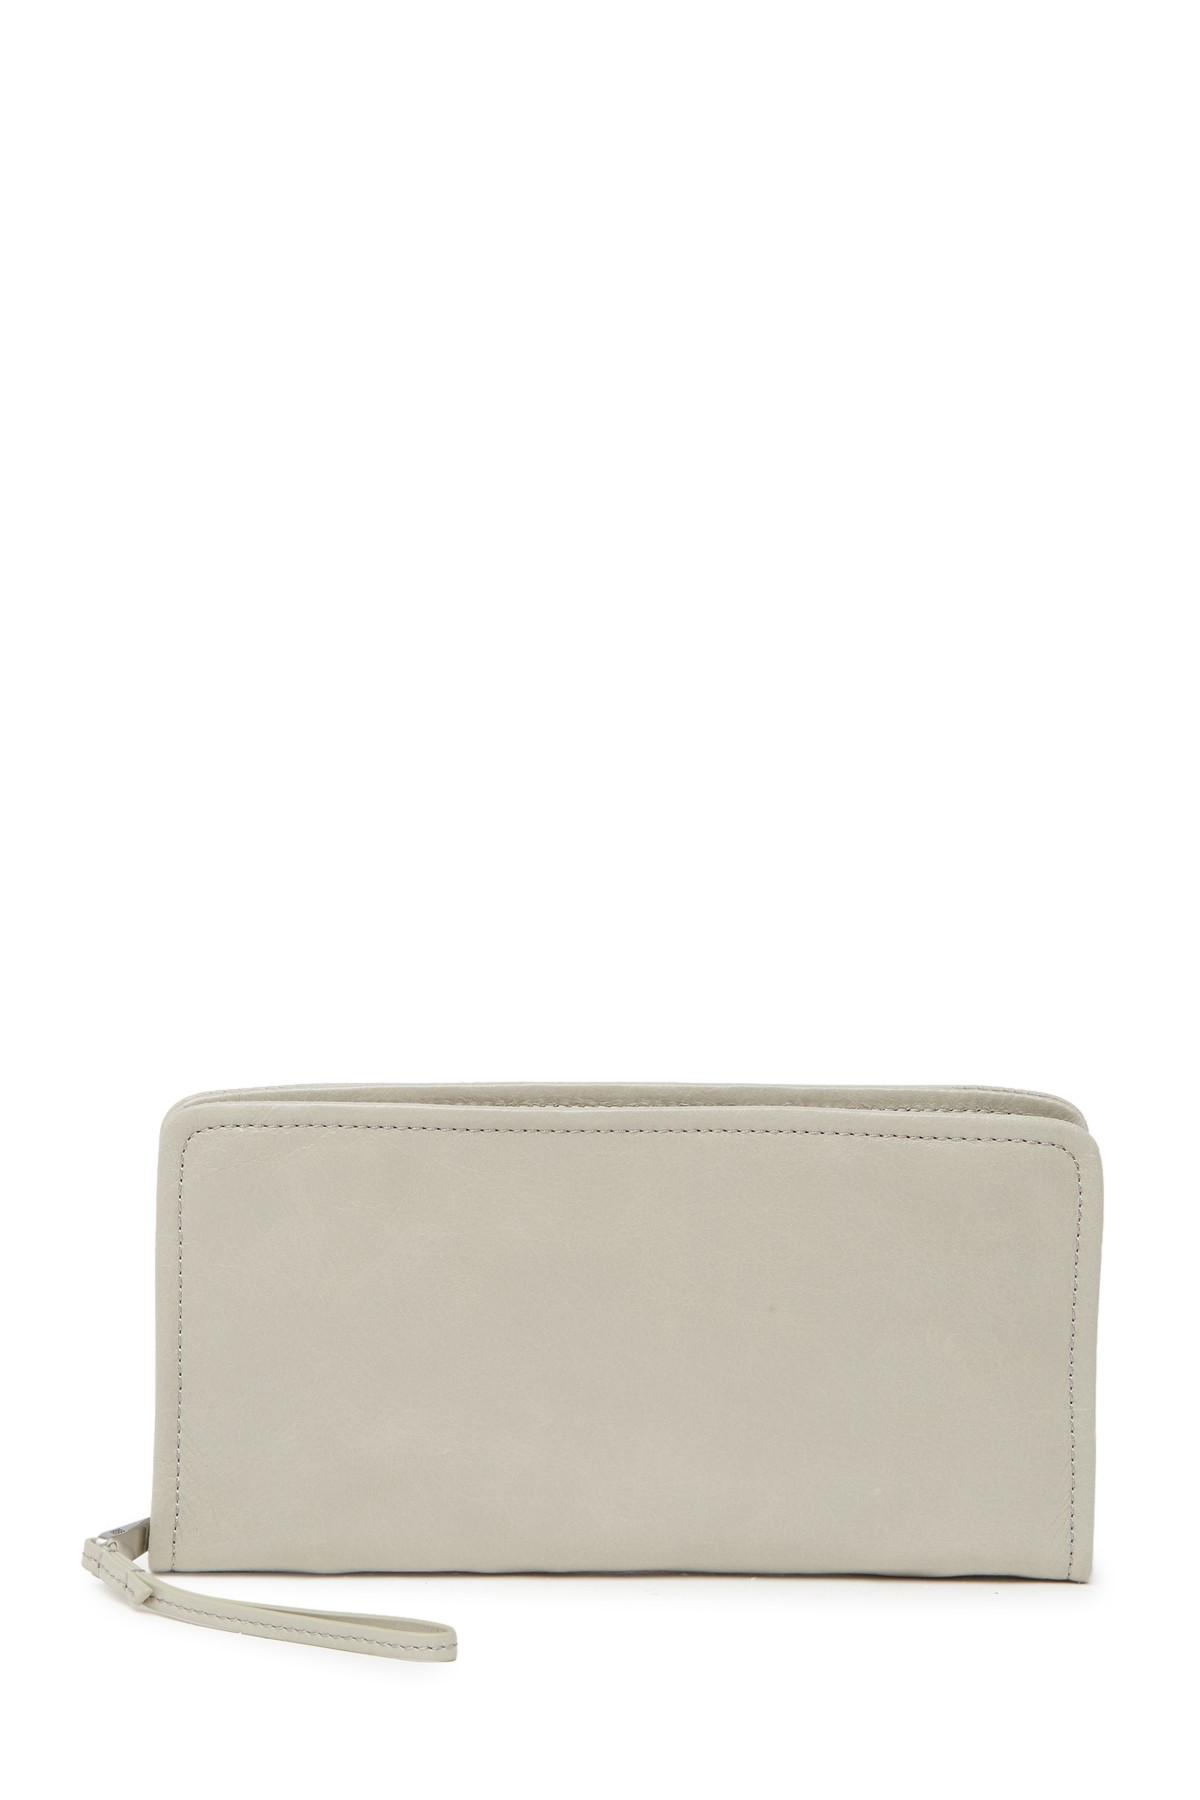 Hobo International Remi Leather Zip-around Wallet in Cloud (Gray) - Lyst